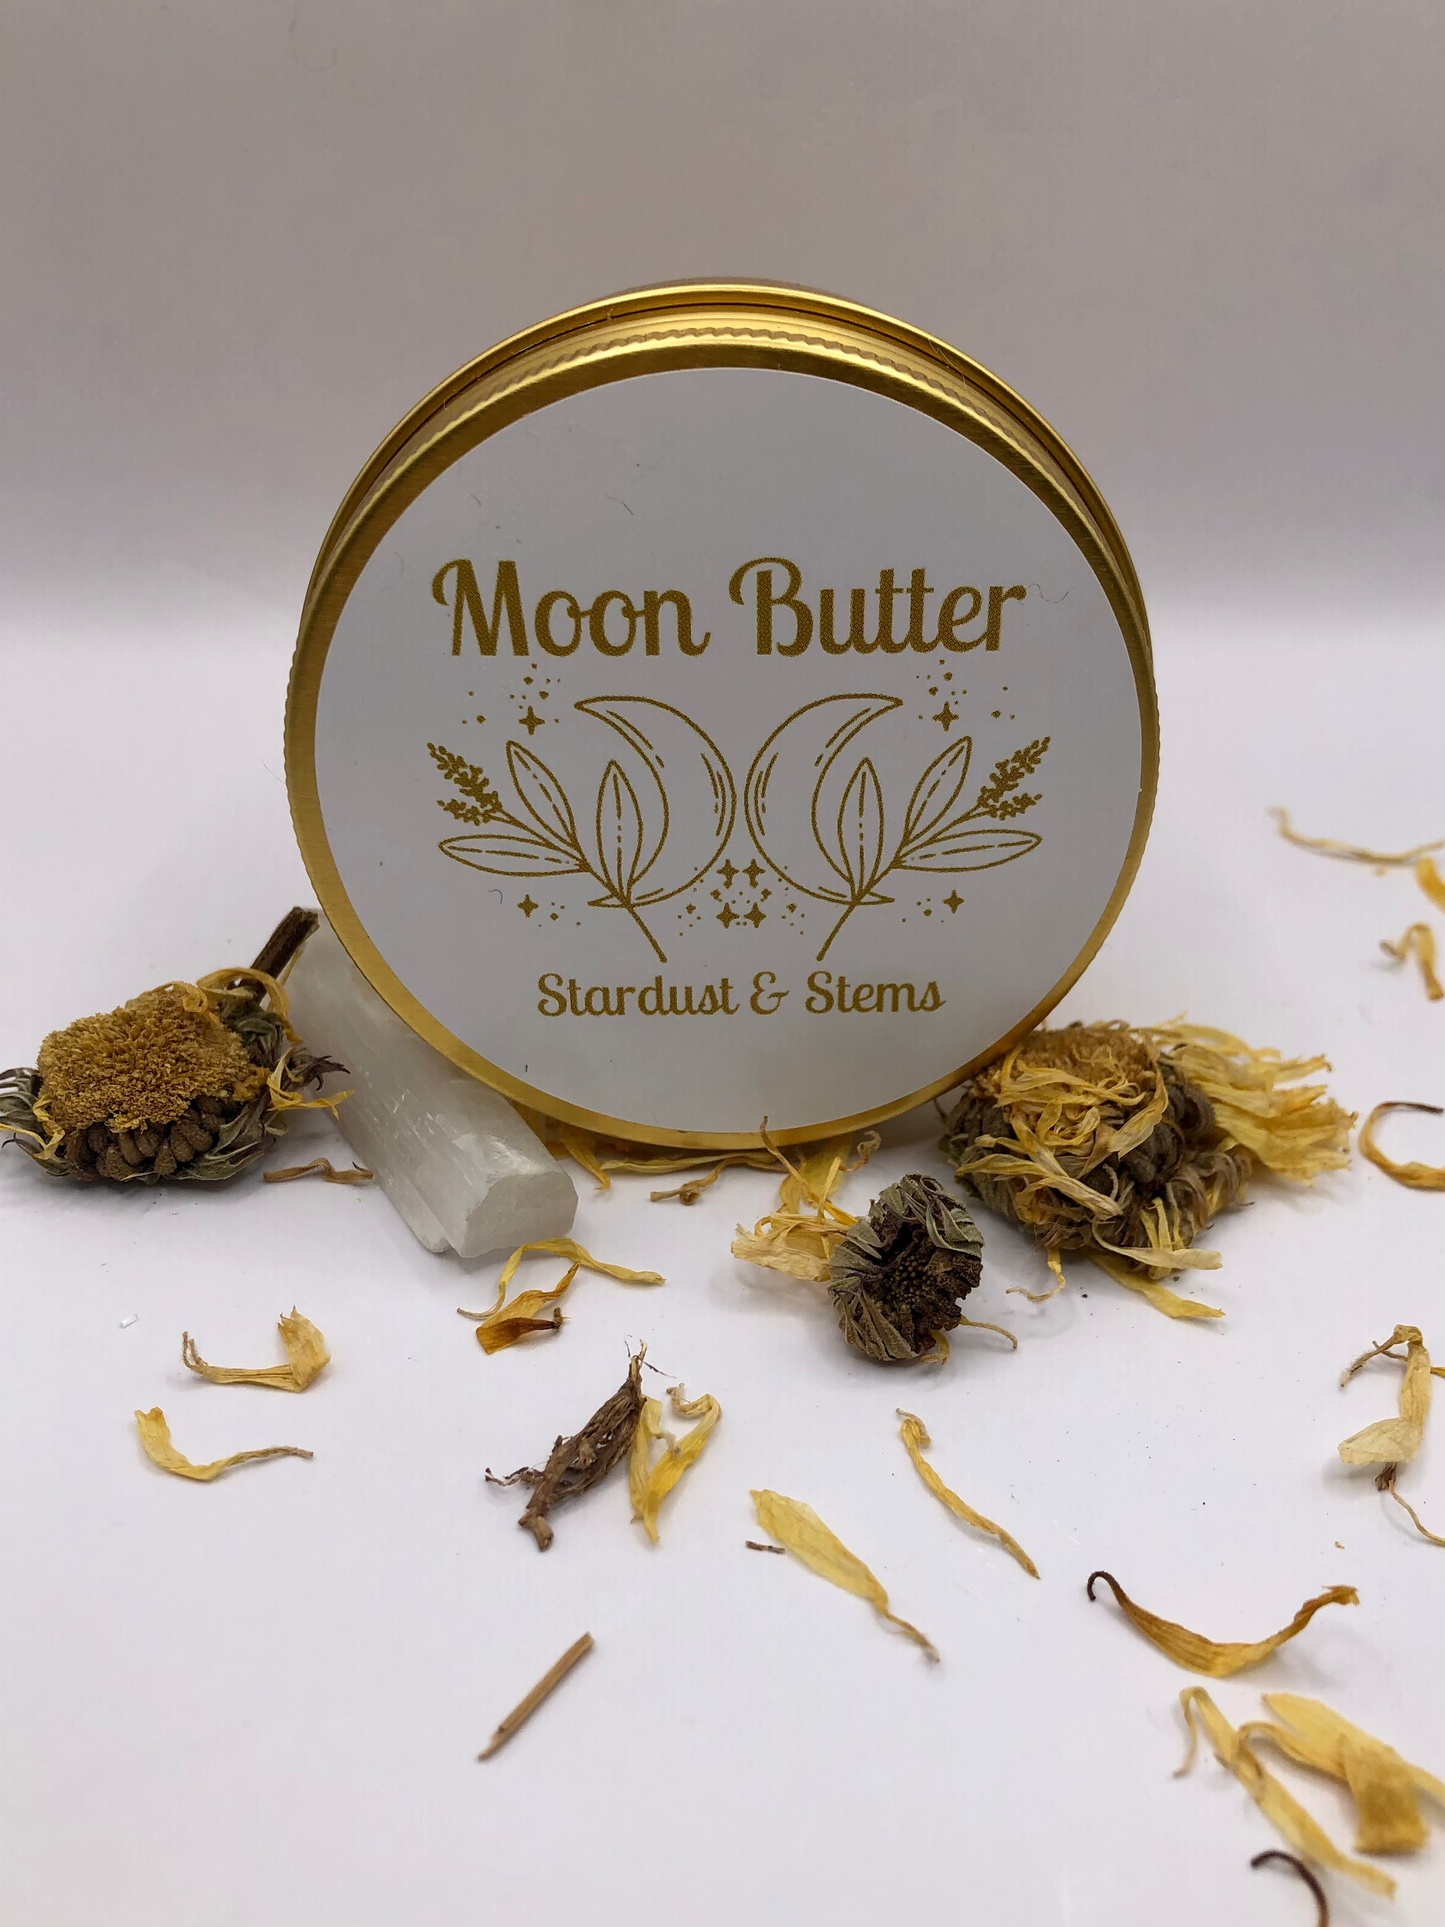 MOON BUTTER Raw Cocoa Butter Whipped Lotion | Calendula Infused Jojoba Oil, Shea Butter | Organic Handmade Small Batch Moisturizer